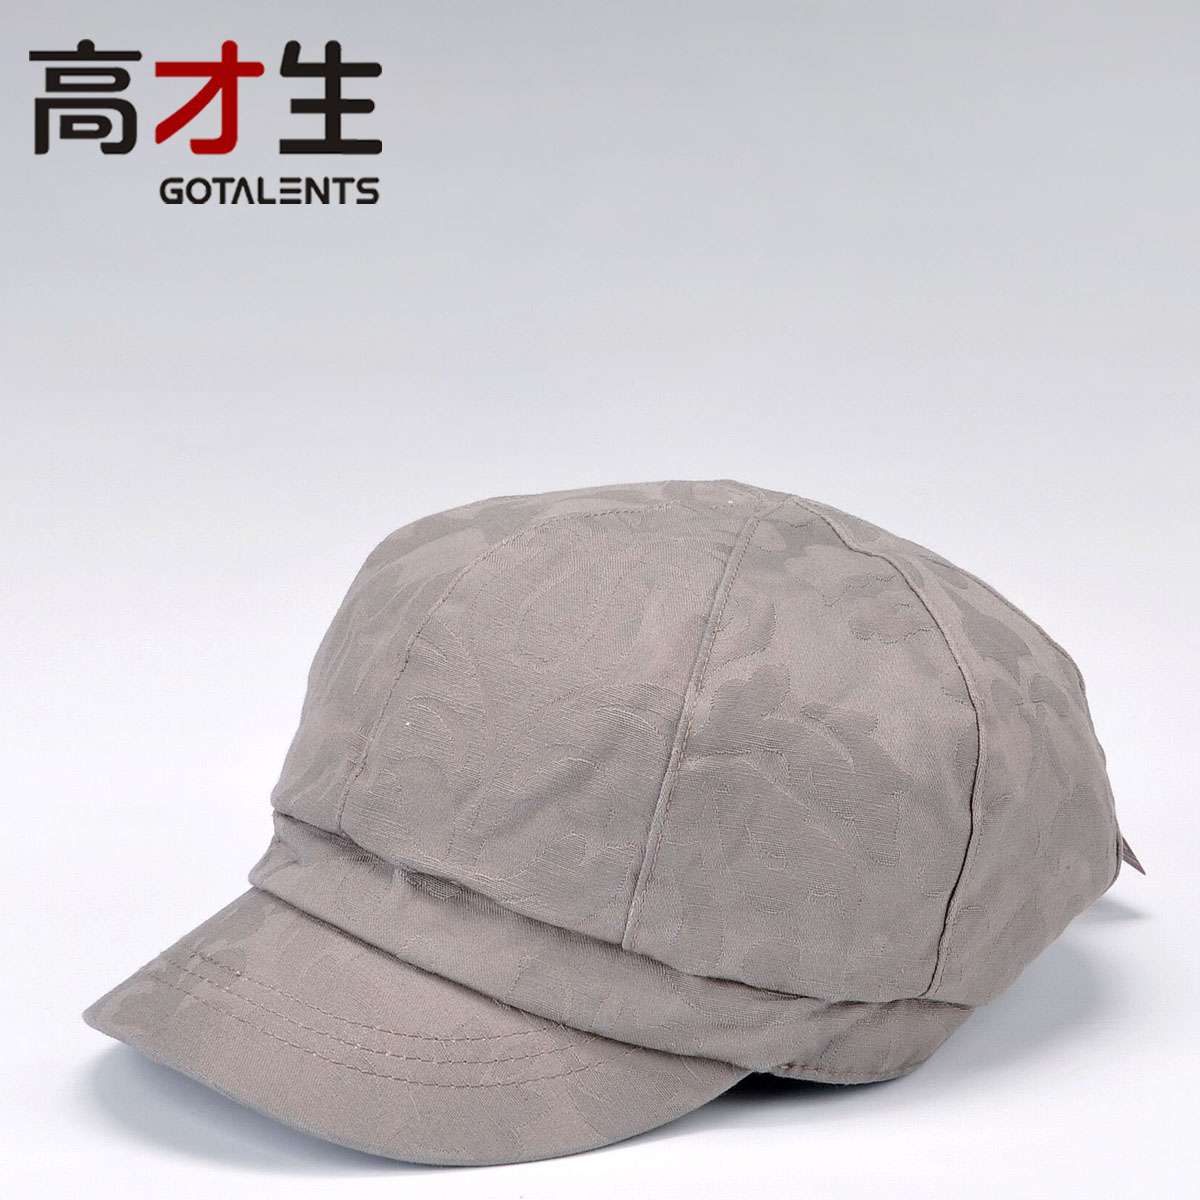 Octagonal cap newsboy cap